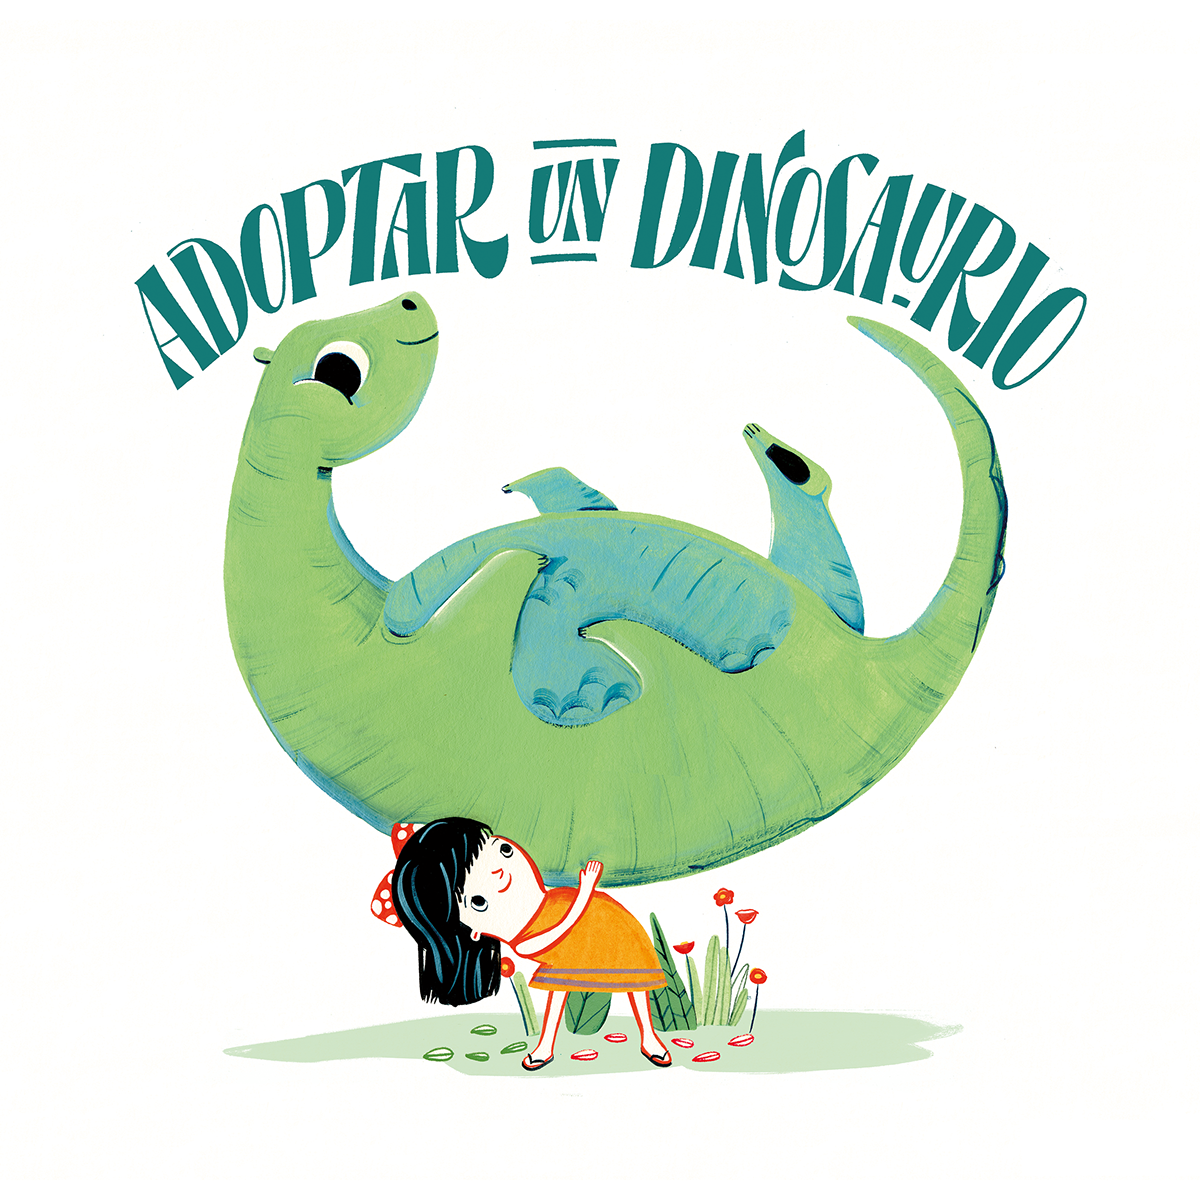 Dinosaur illustrarion Pet childrensbook book anasanfelippo